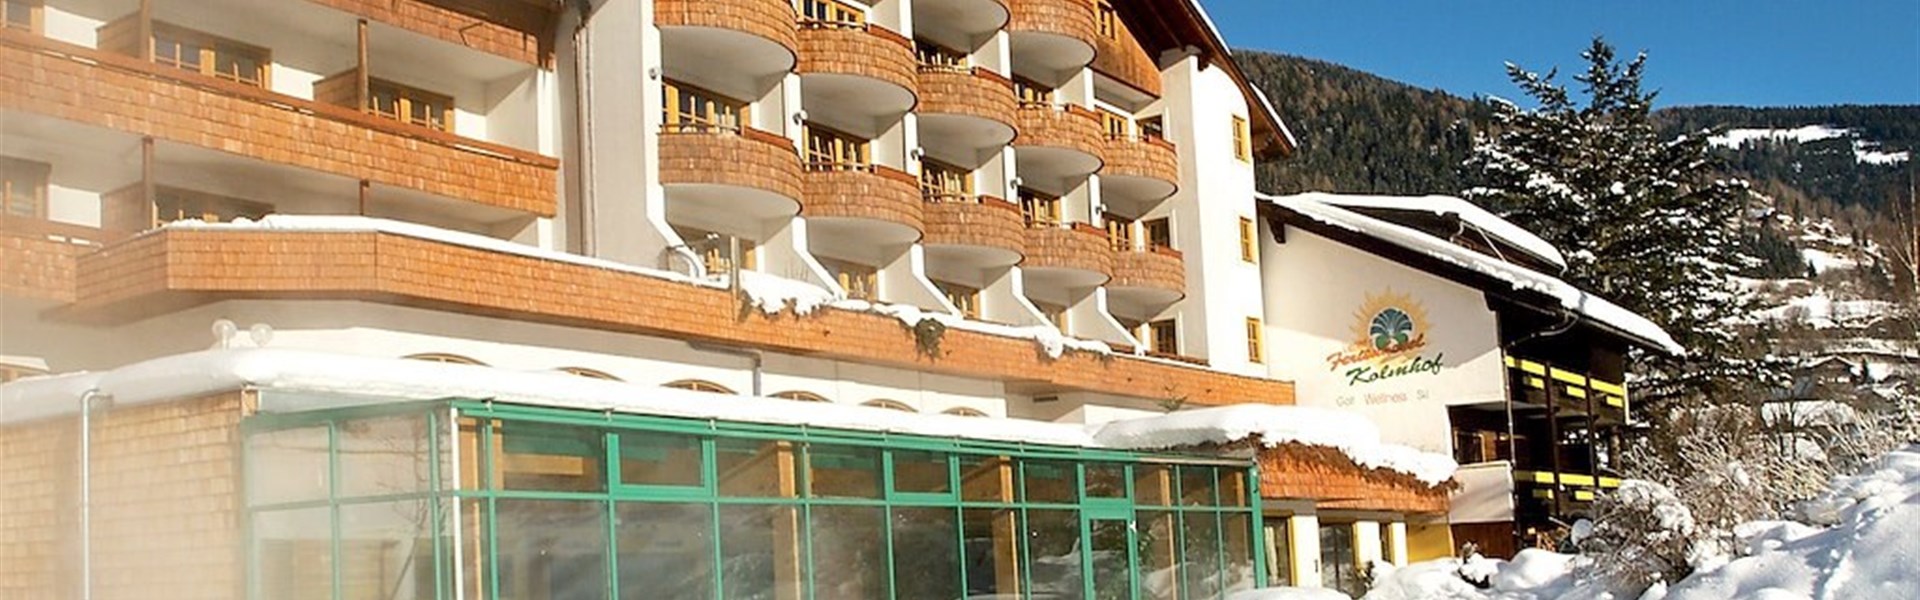 Marco Polo - Hotel Kolmhof (W) - 